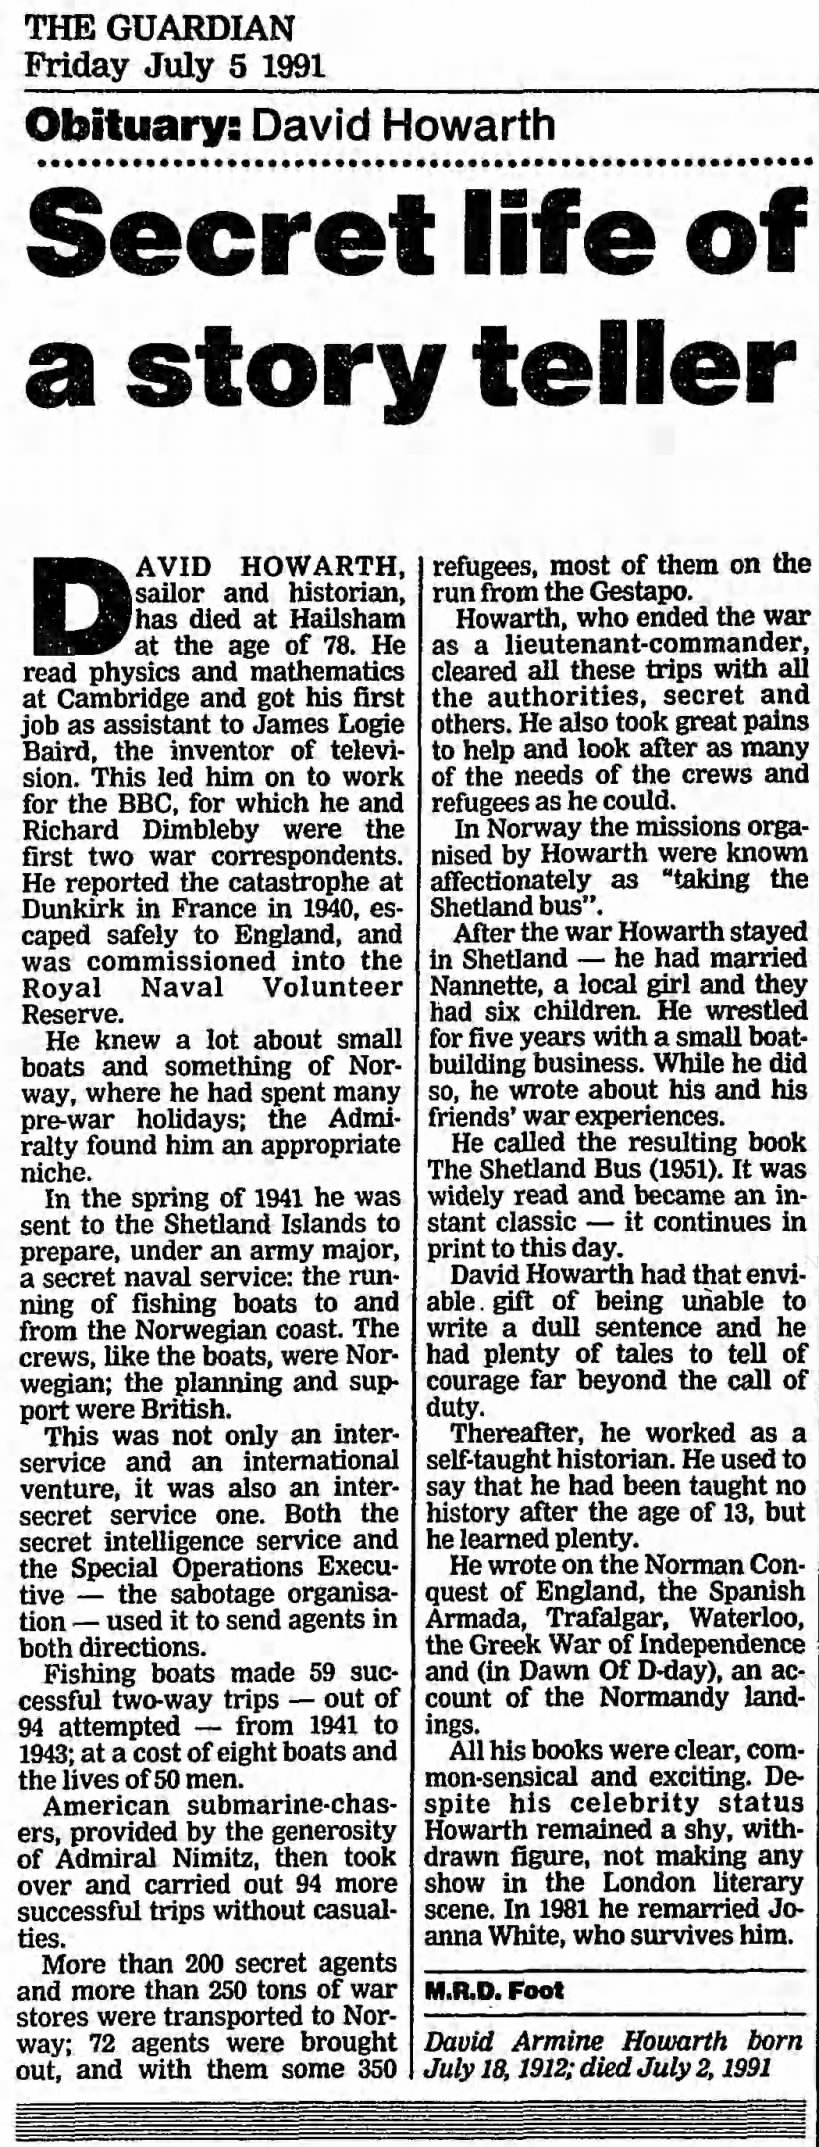 David Howarth obit The Guardian 07-05-91